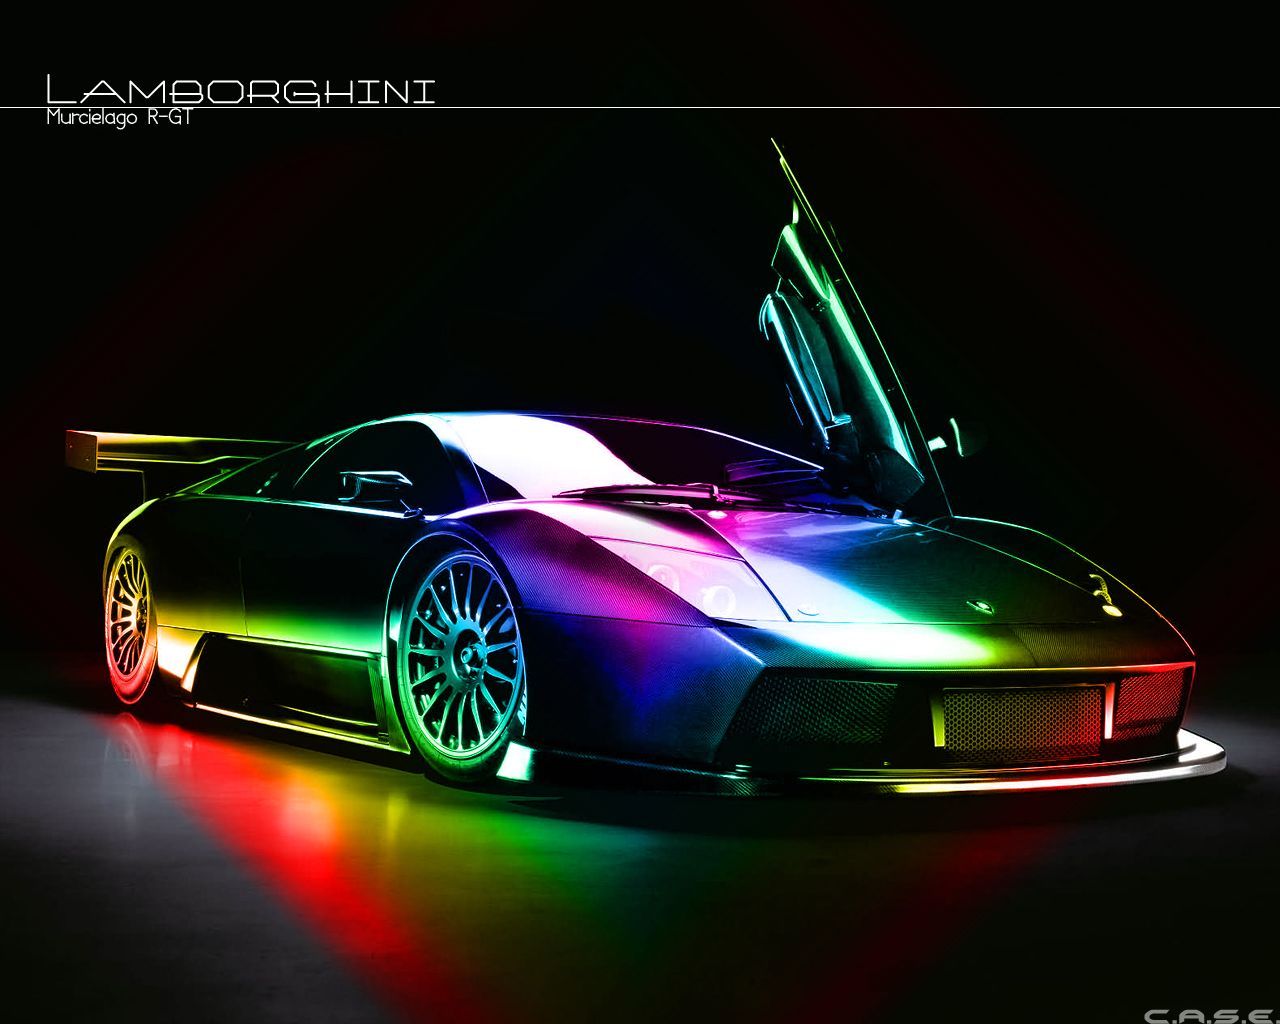 Lamborghini Murcielago rainbow. Sports cars luxury, Cool sports cars, Sports cars ferrari